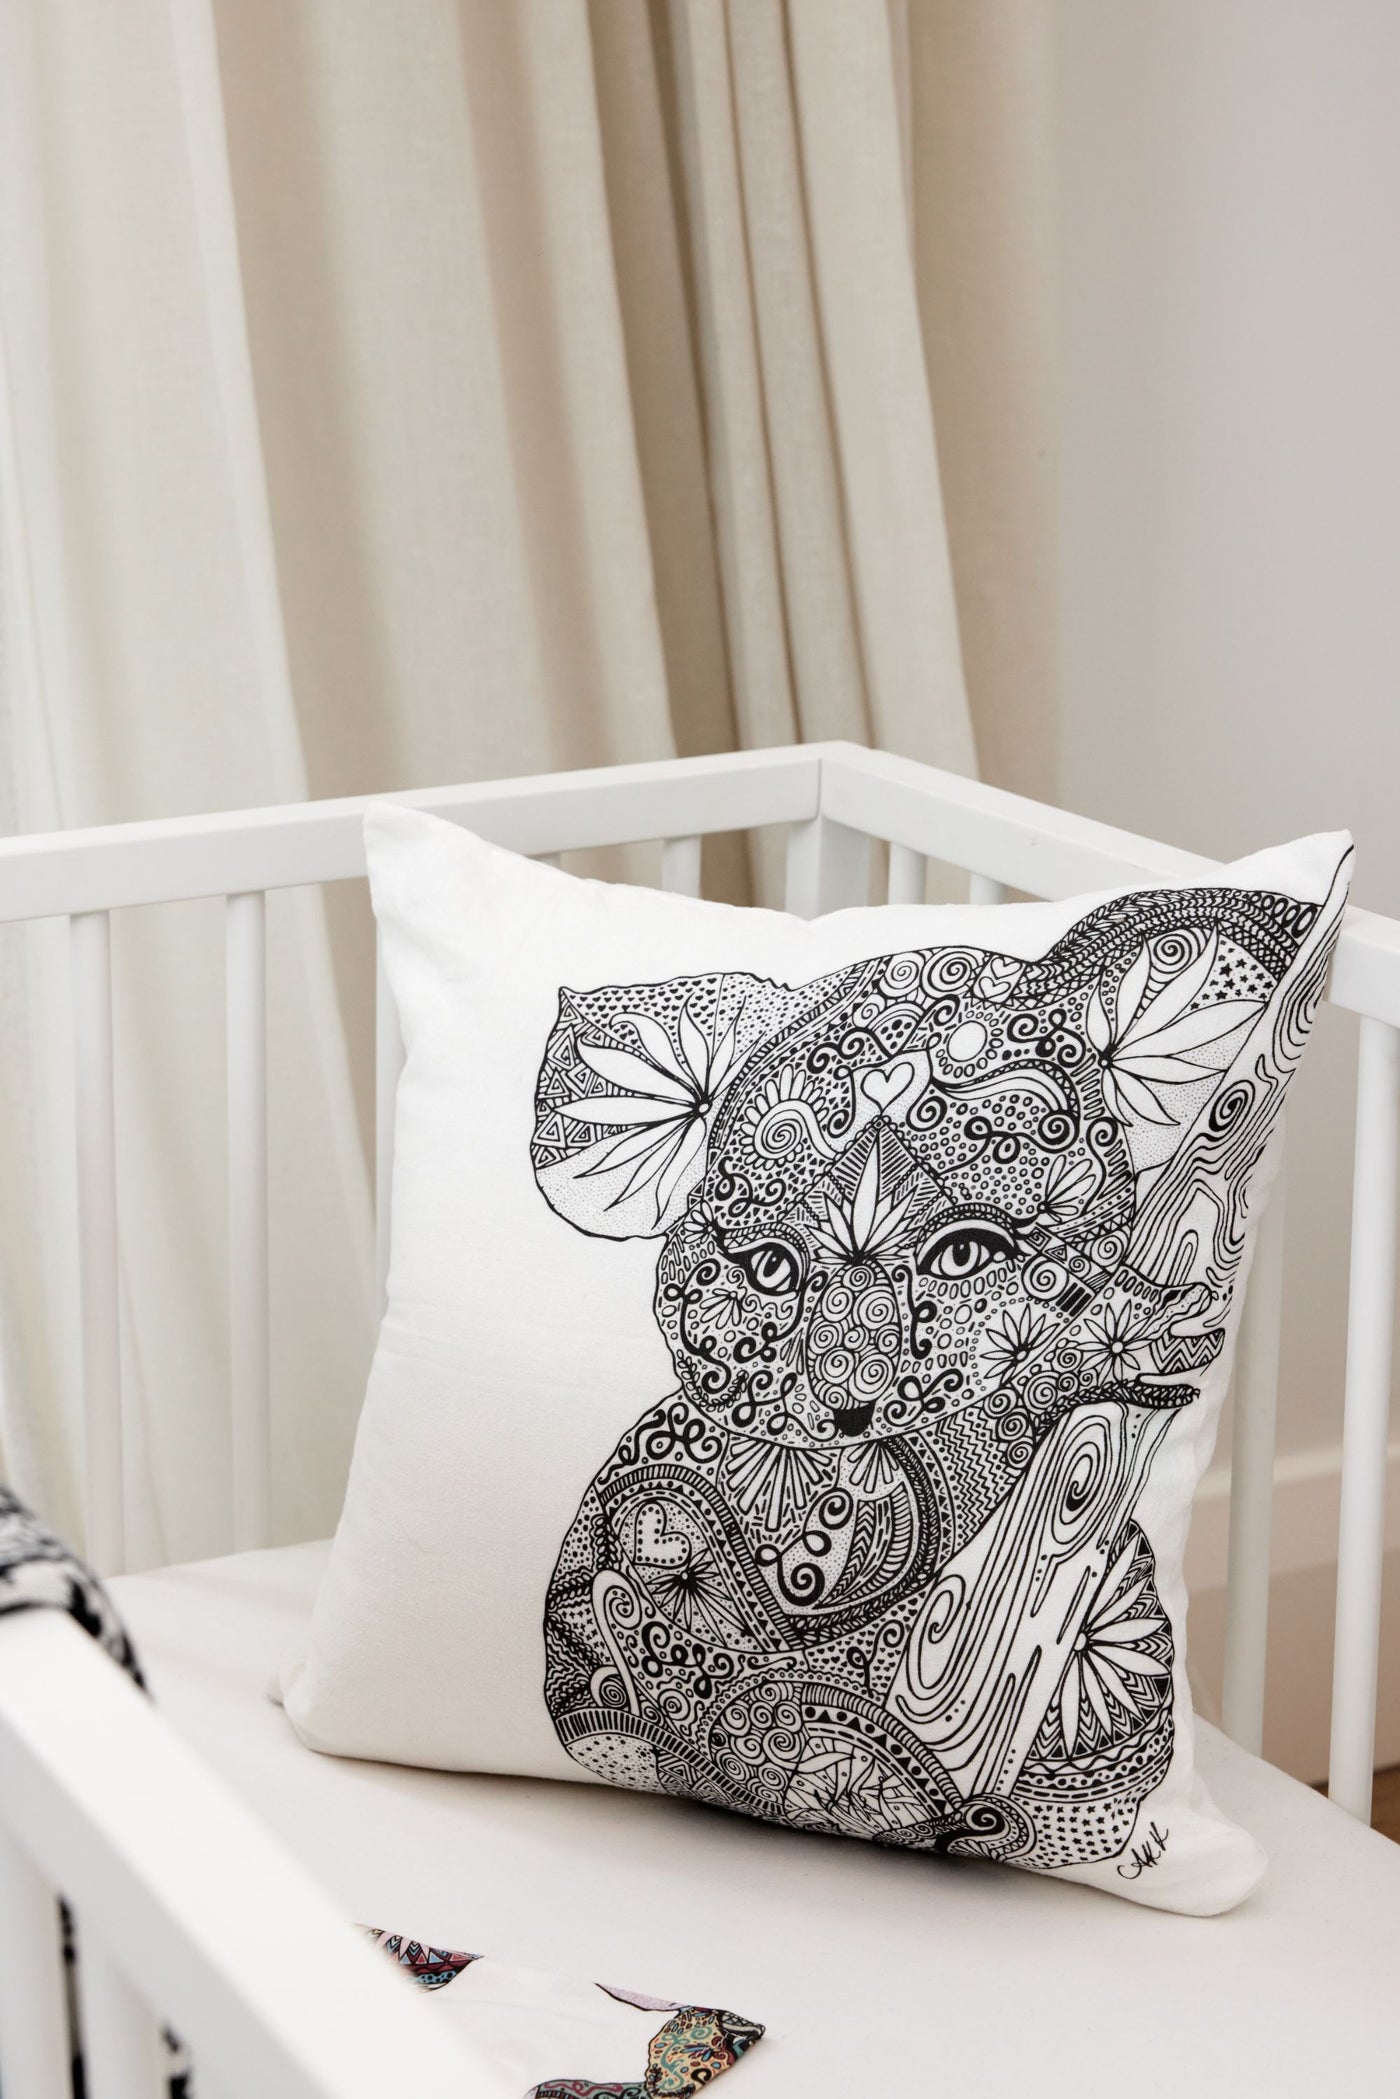 Kimberly the Koala Natural Linen Cushion - Black and White